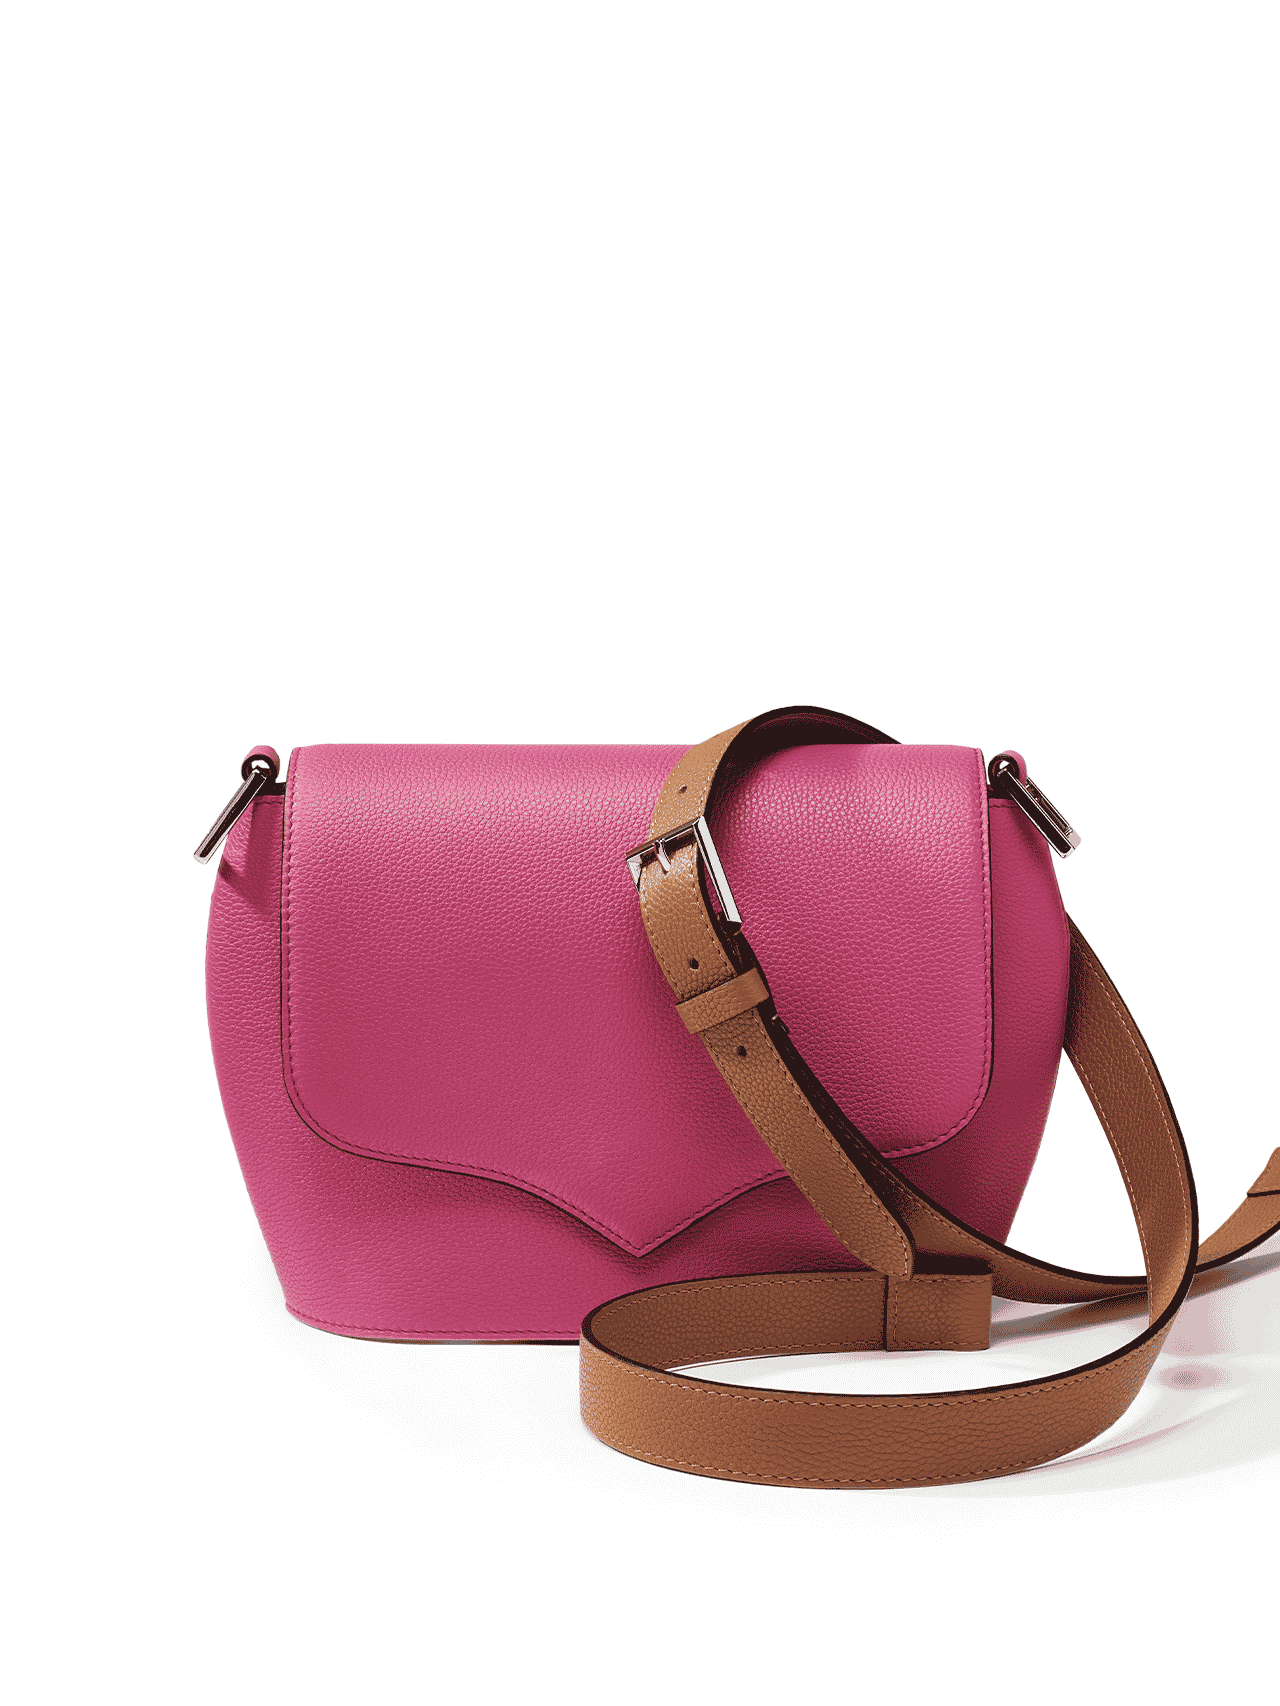 bag leather jean rousseau pink purple brown